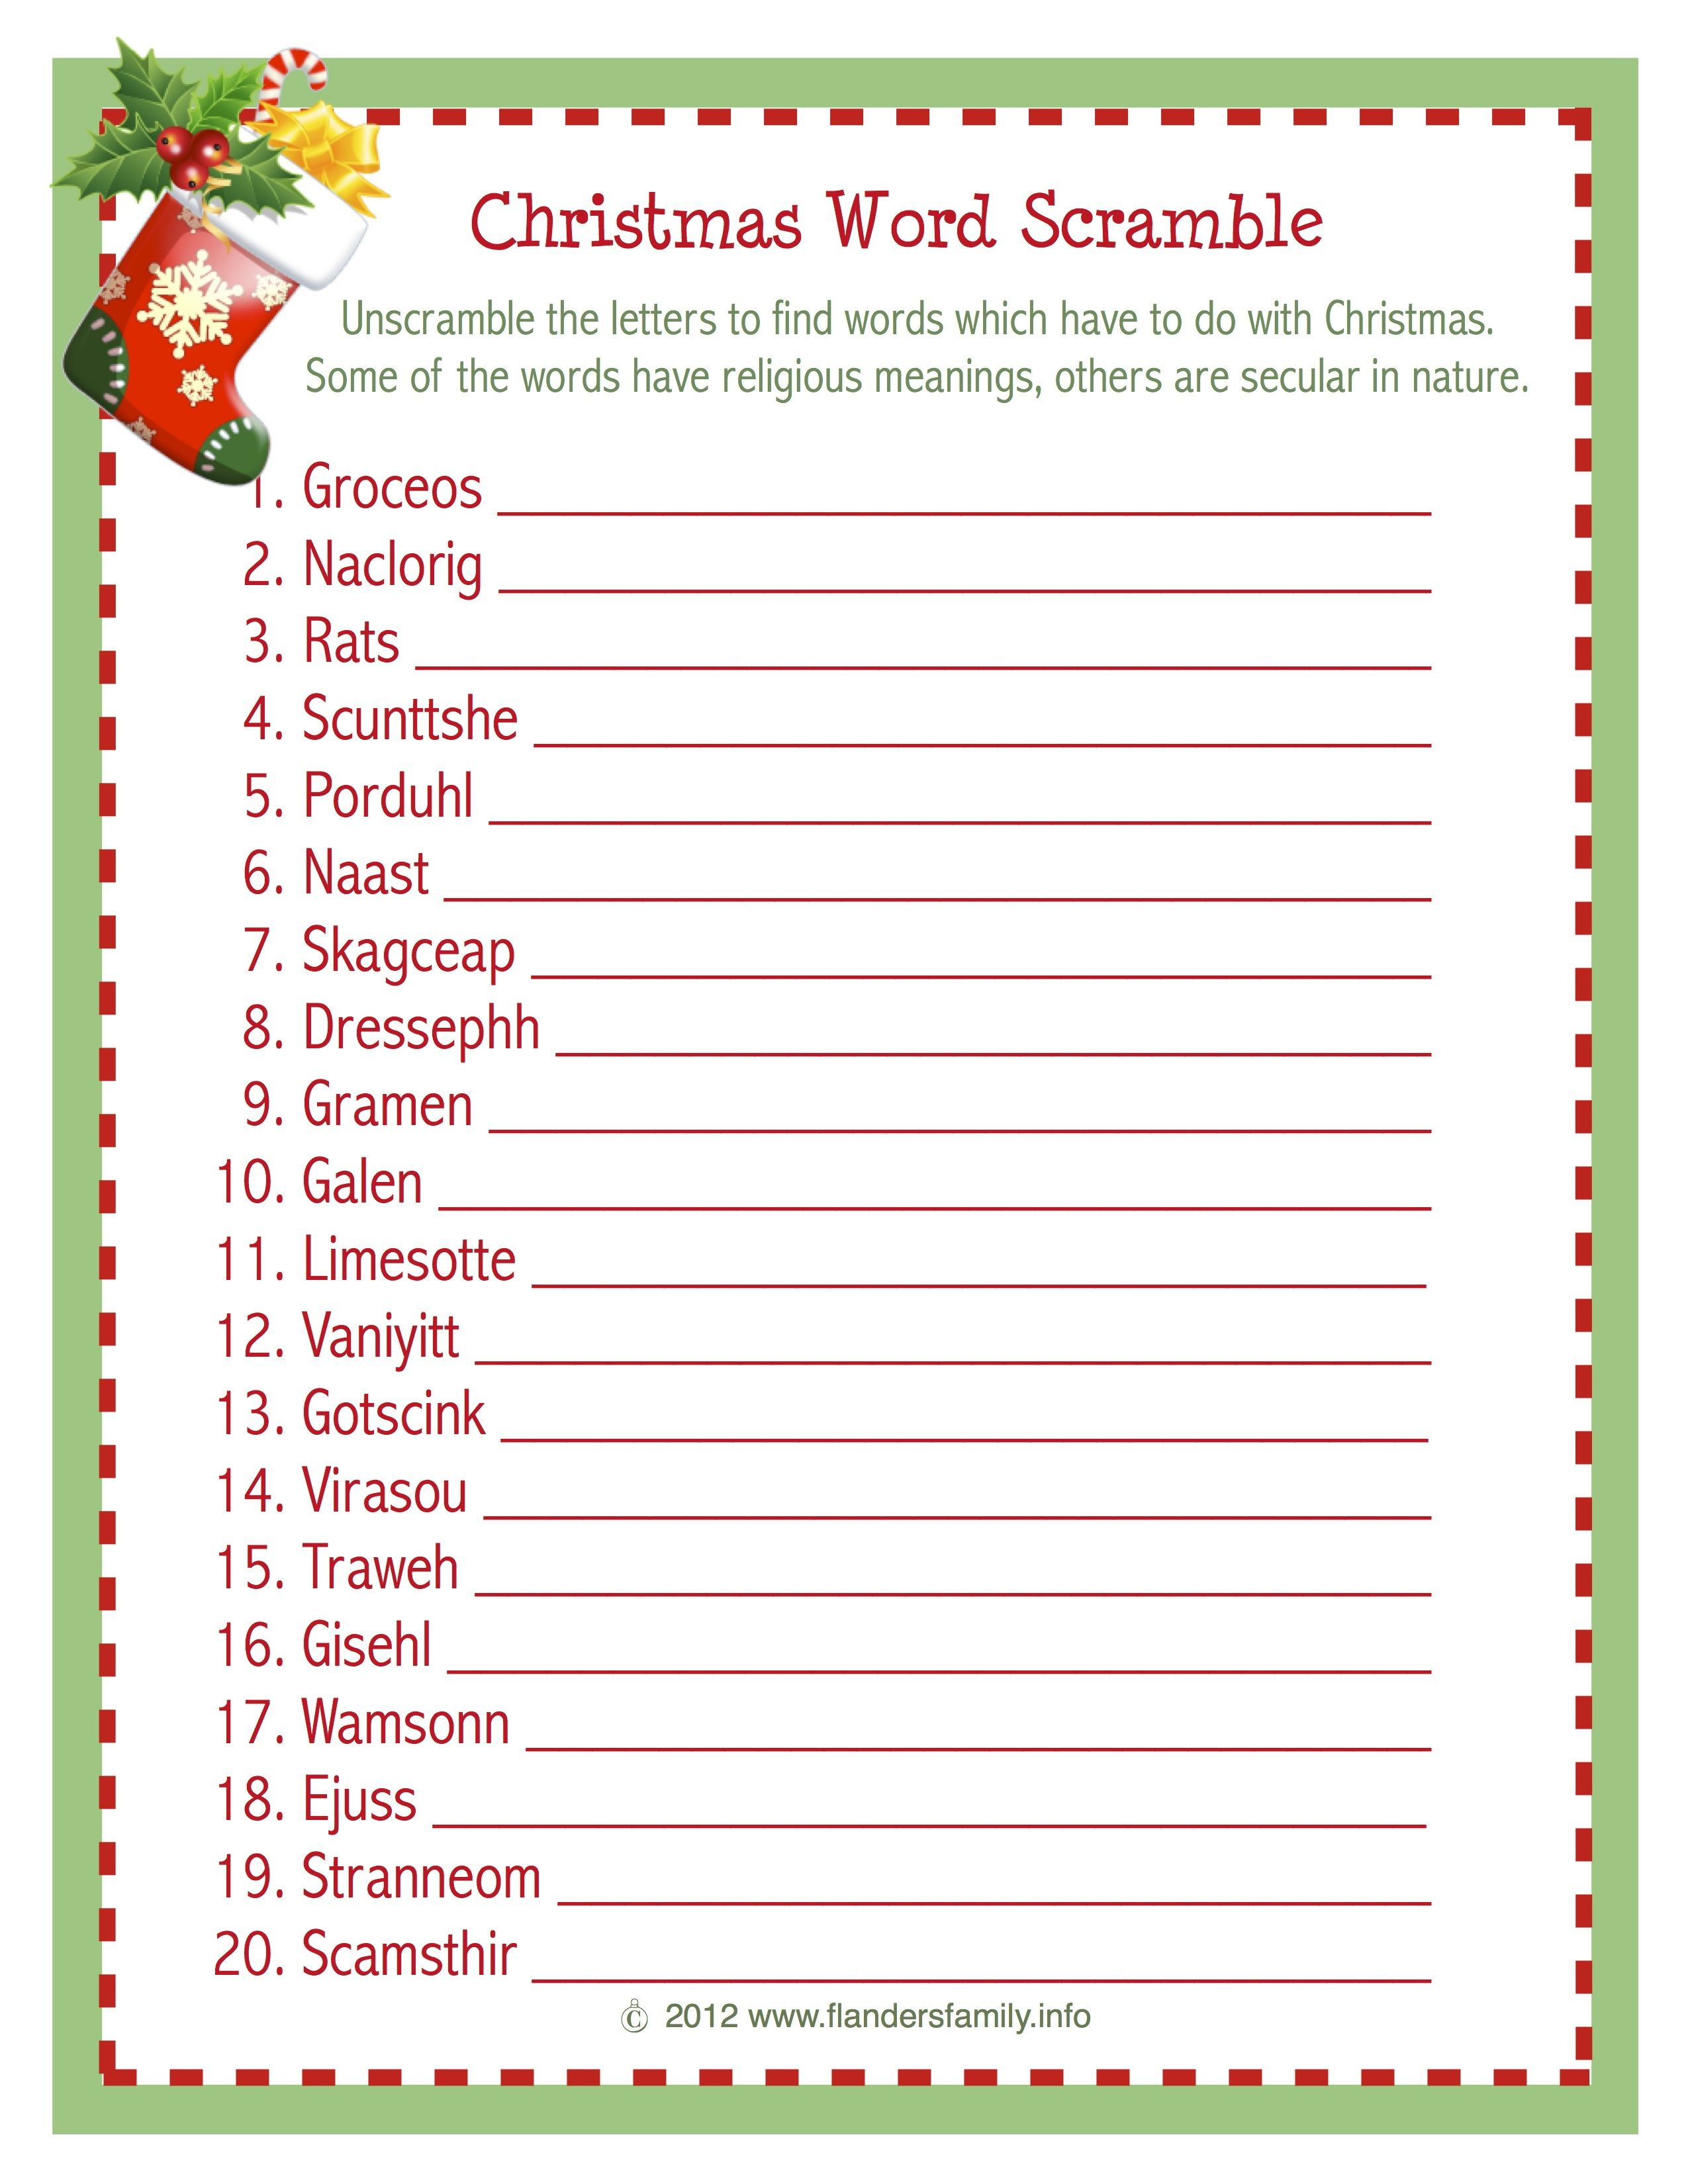 Christmas Word Scramble (Free Printable) | Holiday Recipes - Free Games For Christmas That Is Printable